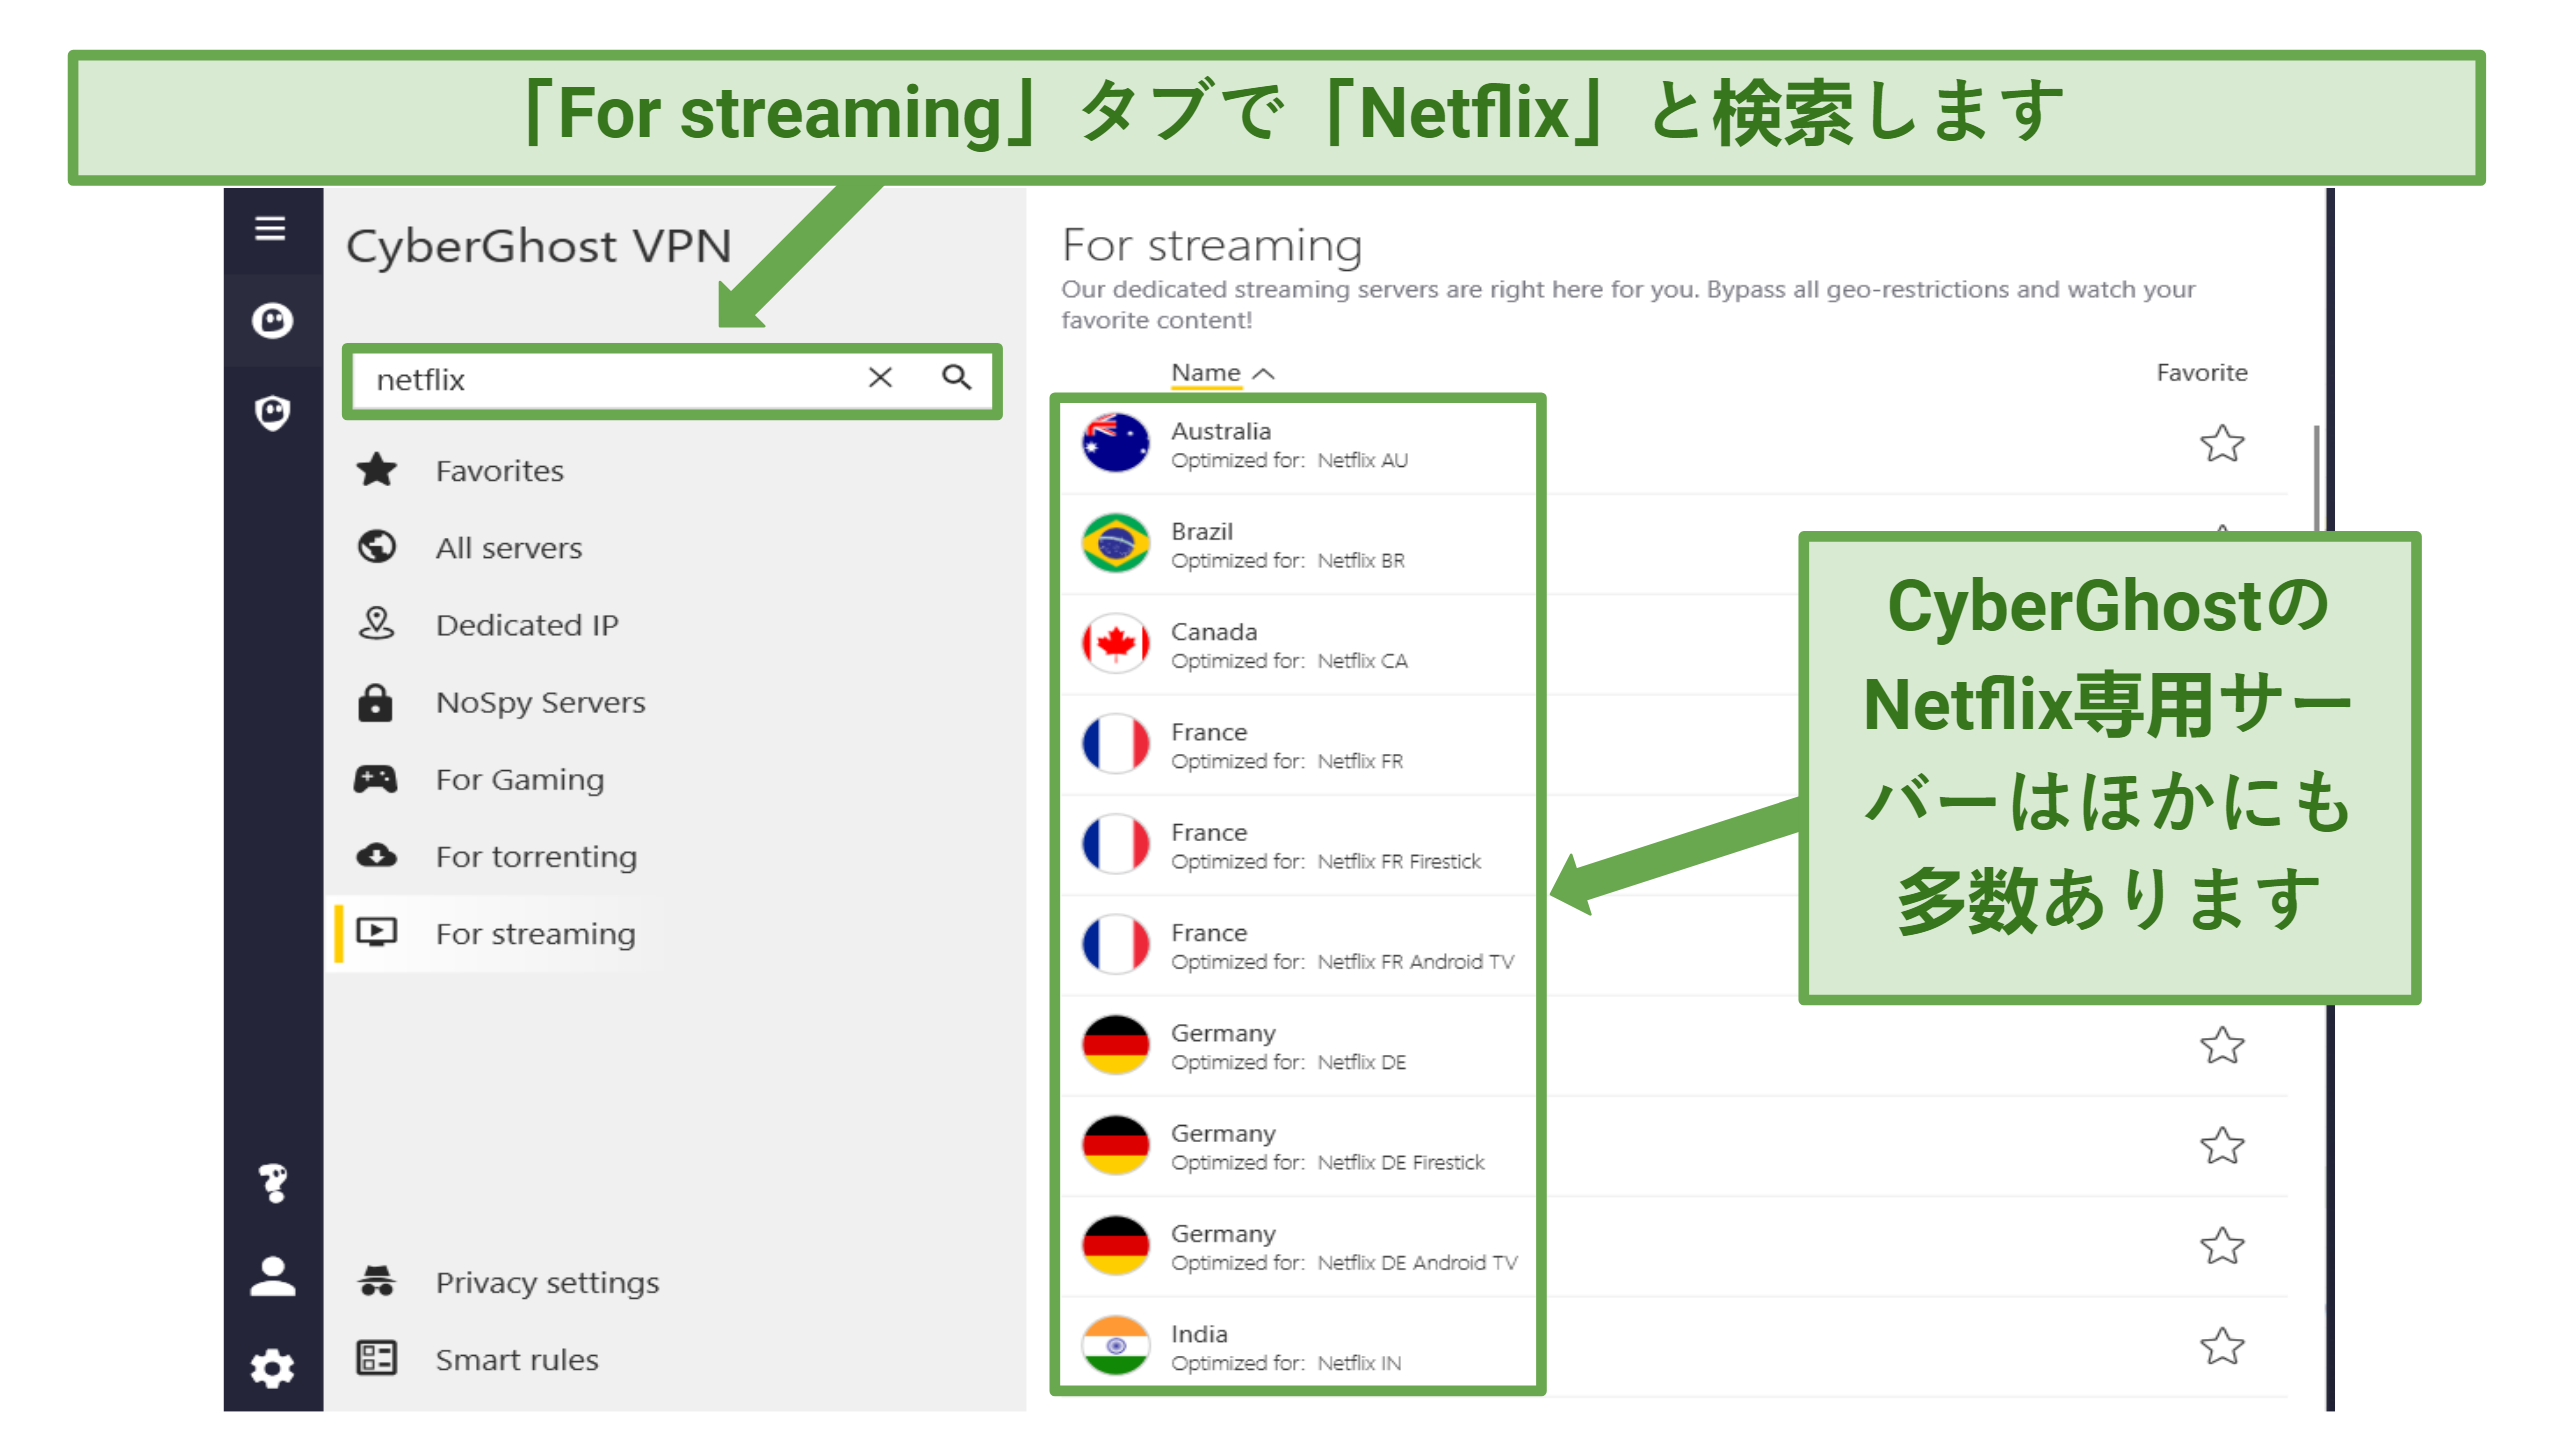 Screenshot displaying a list of CyberGhost's Netflix-optimized servers